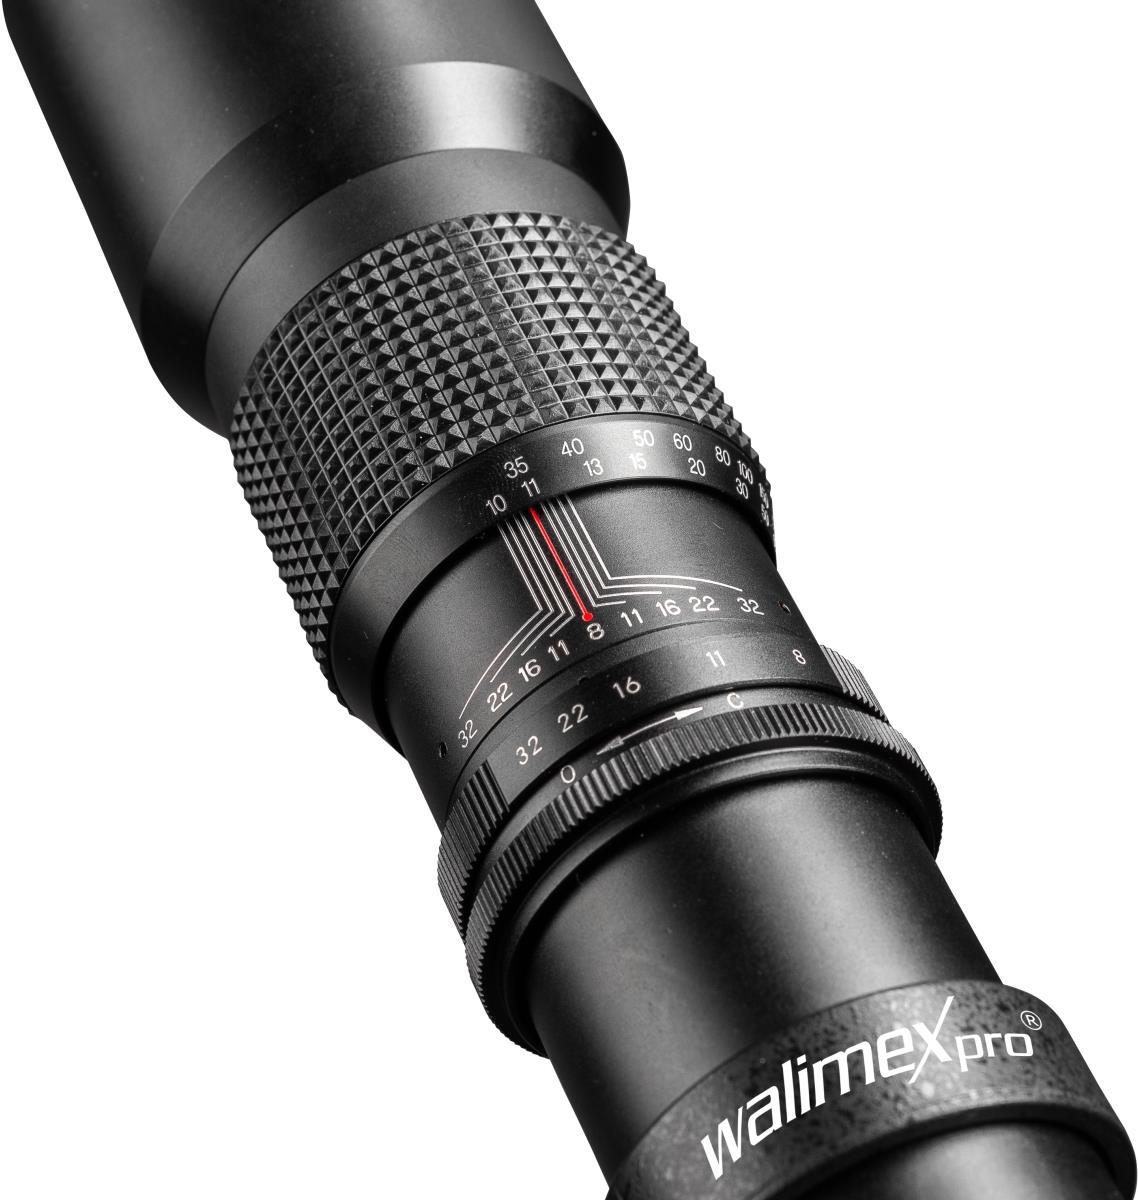 WALIMEX Tele-Objektiv Walimex Linsenobjektiv f/1 - 8.0 500 mm